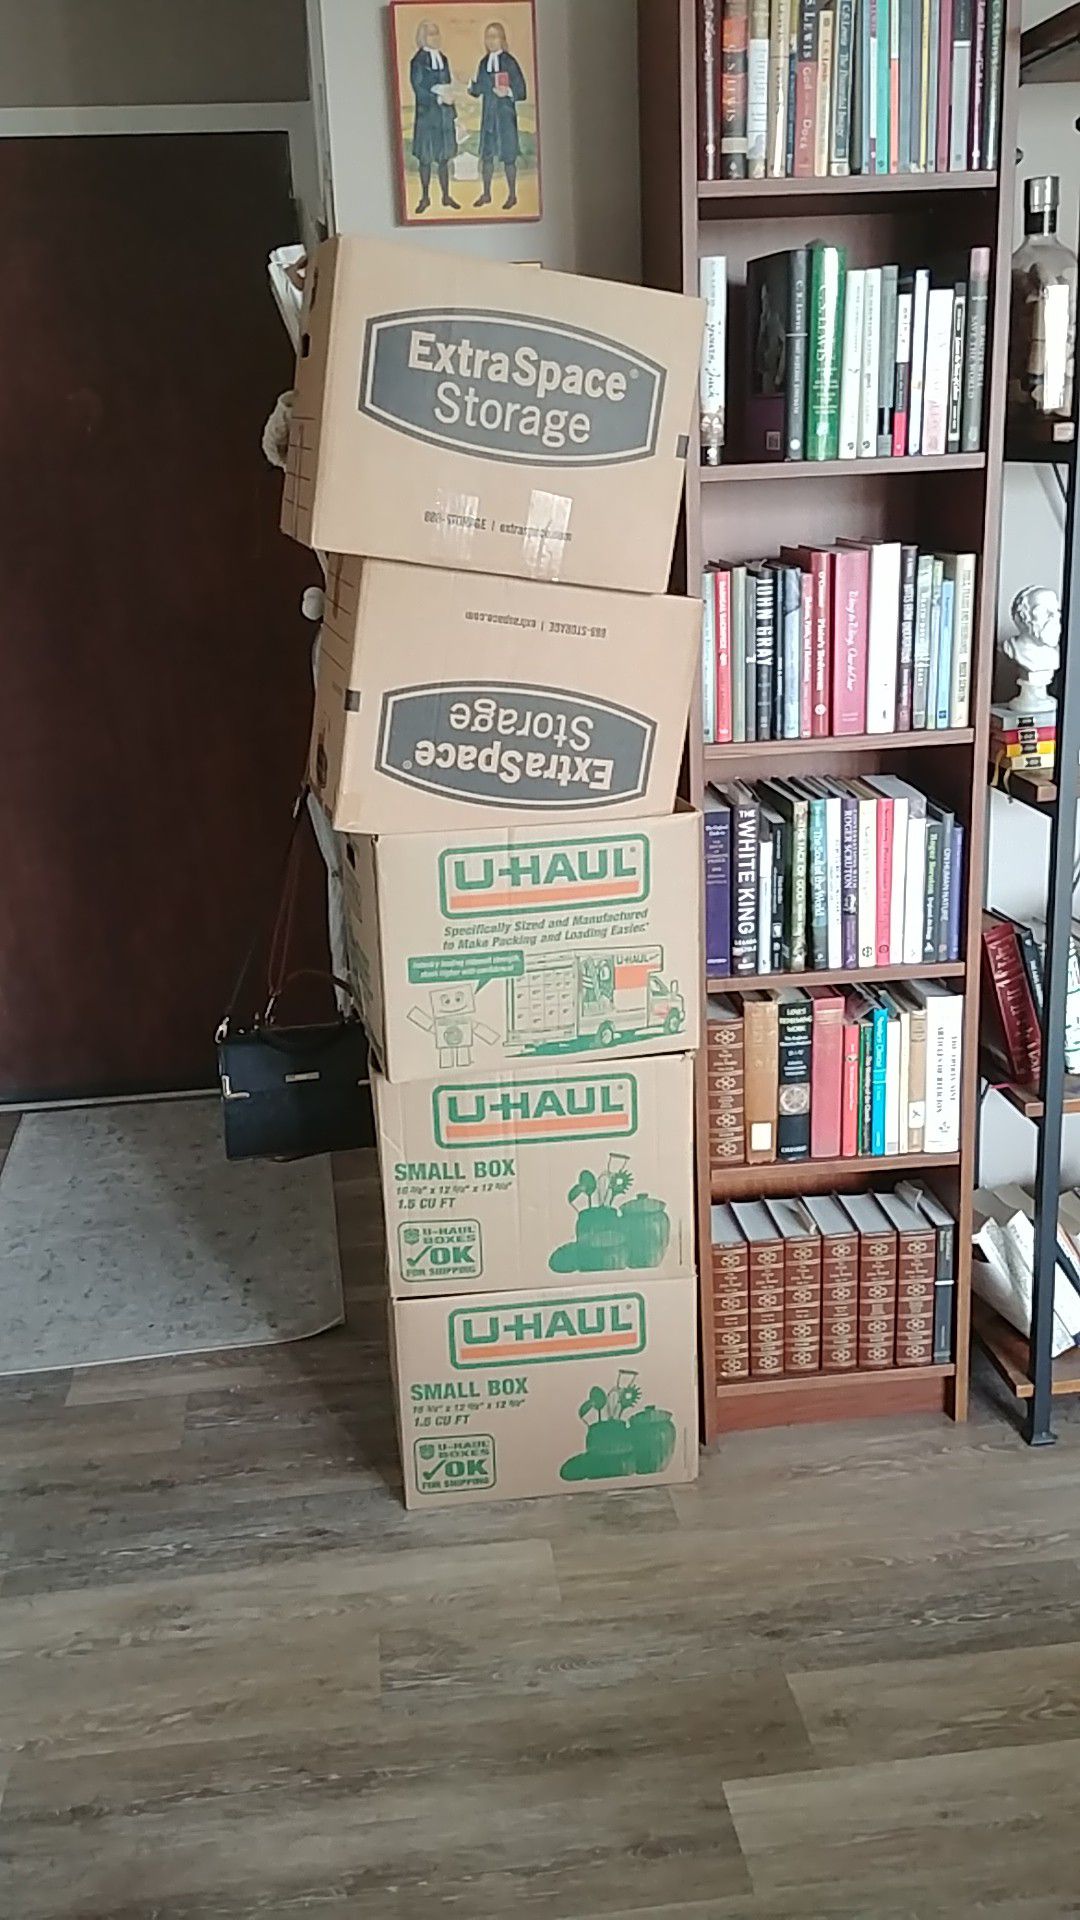 5 storage boxes, $1 each